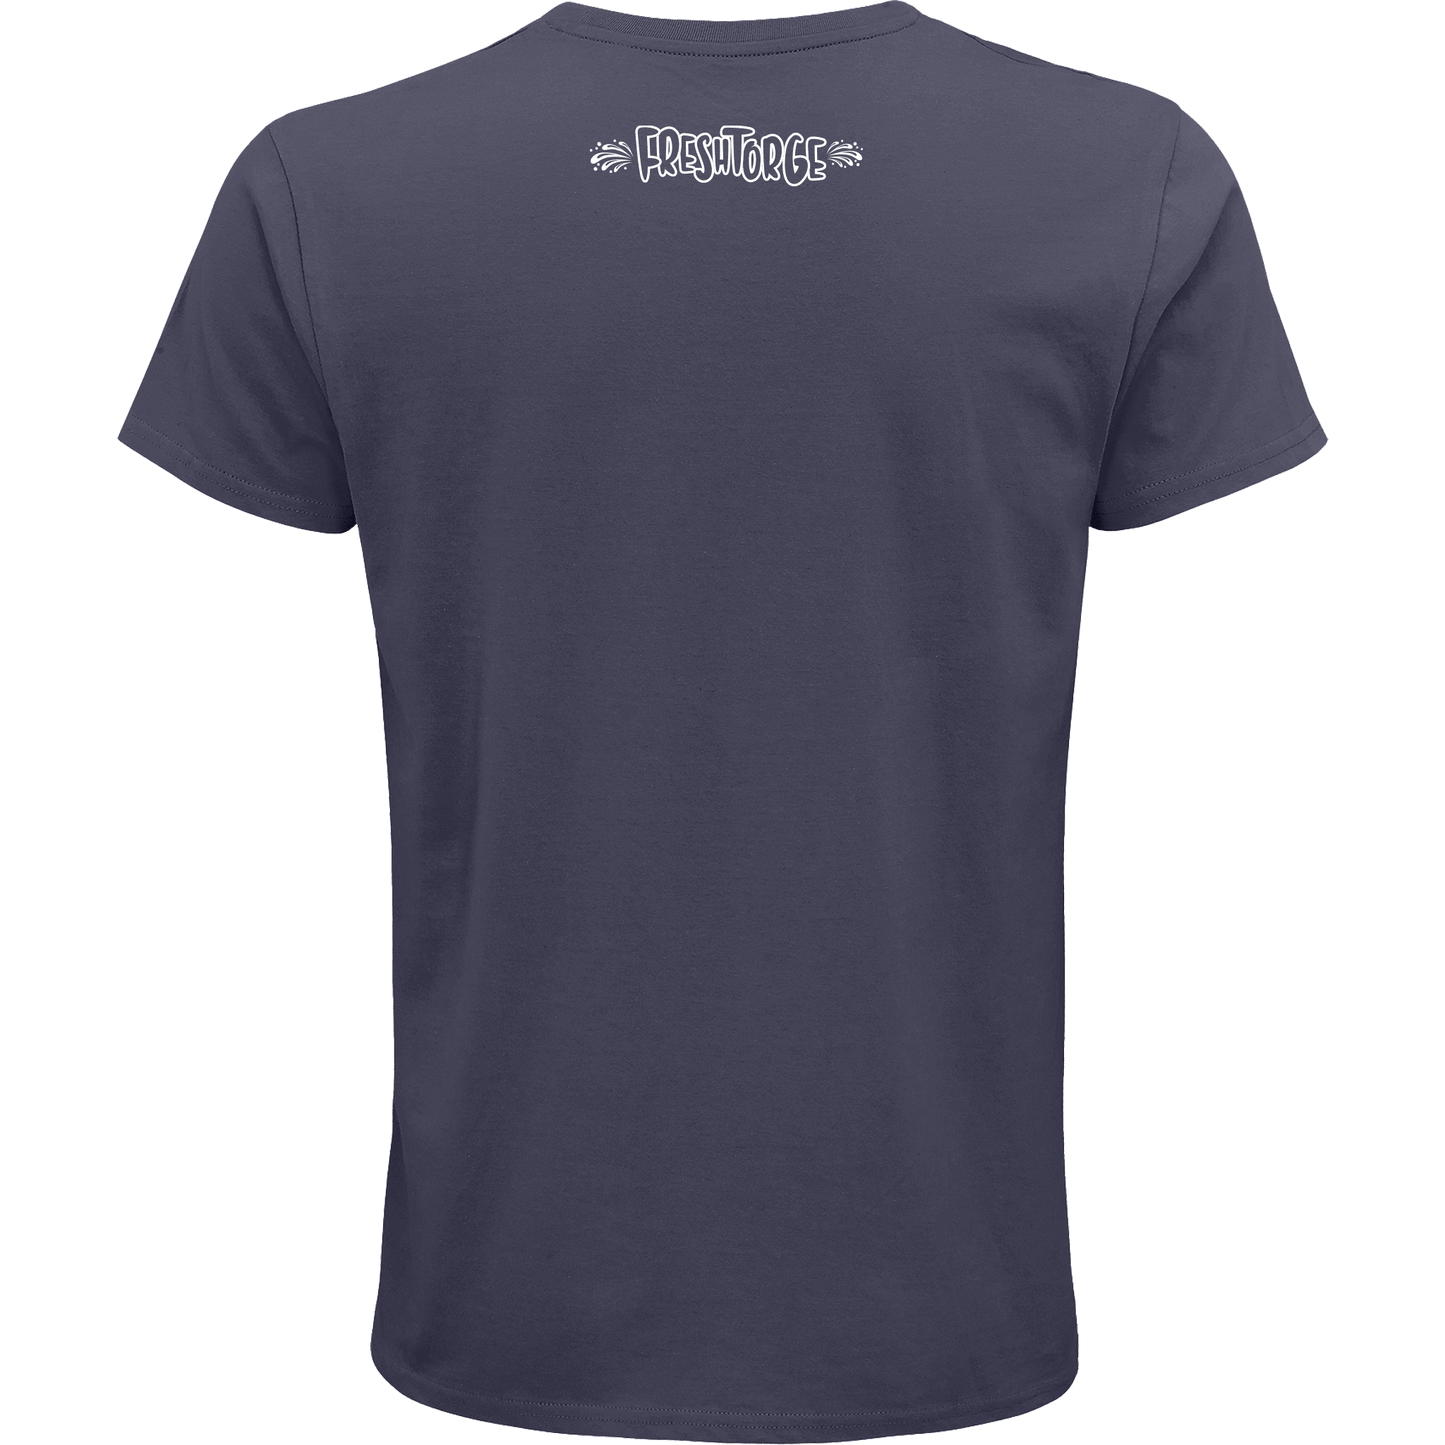 T-Shirt "Mook dat!" Grau - FRESHTORGE SHOP